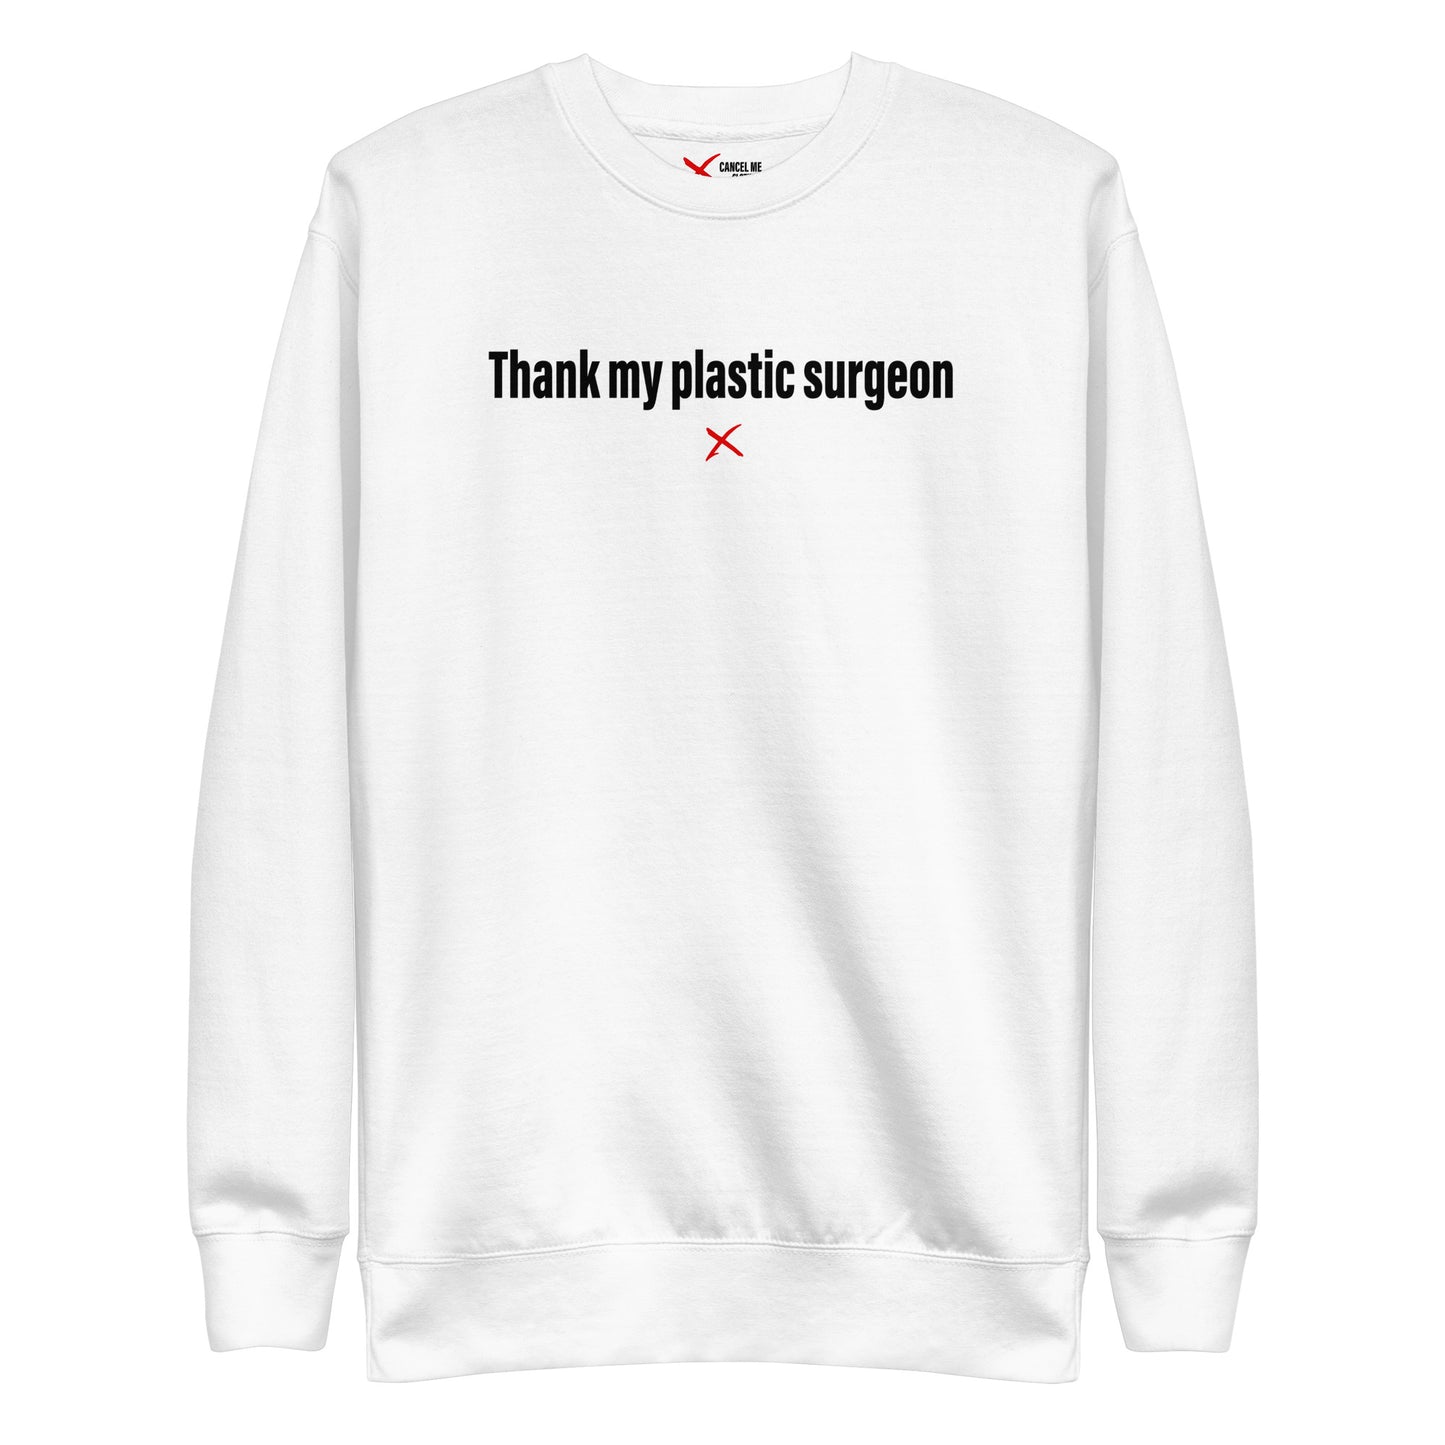 Thank my plastic surgeon - Sweatshirt